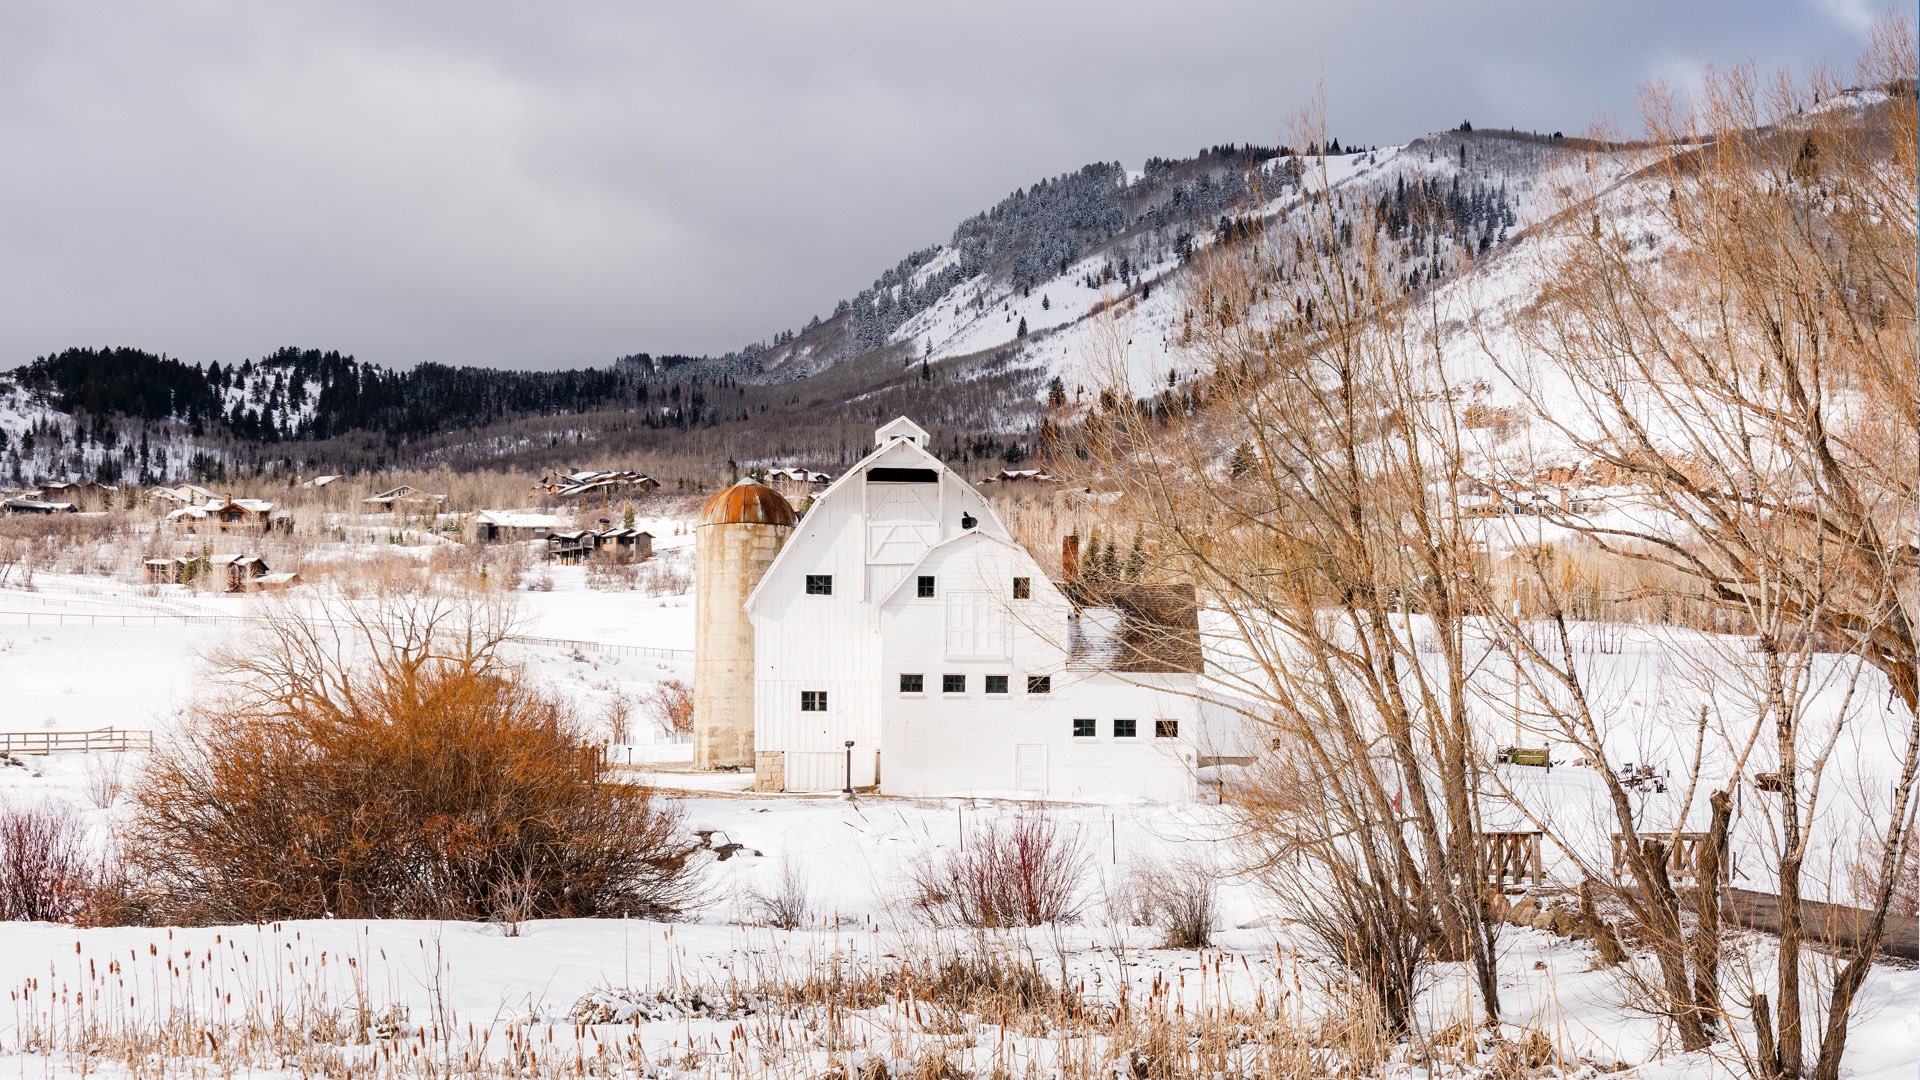 White Barn in the winter, Park City